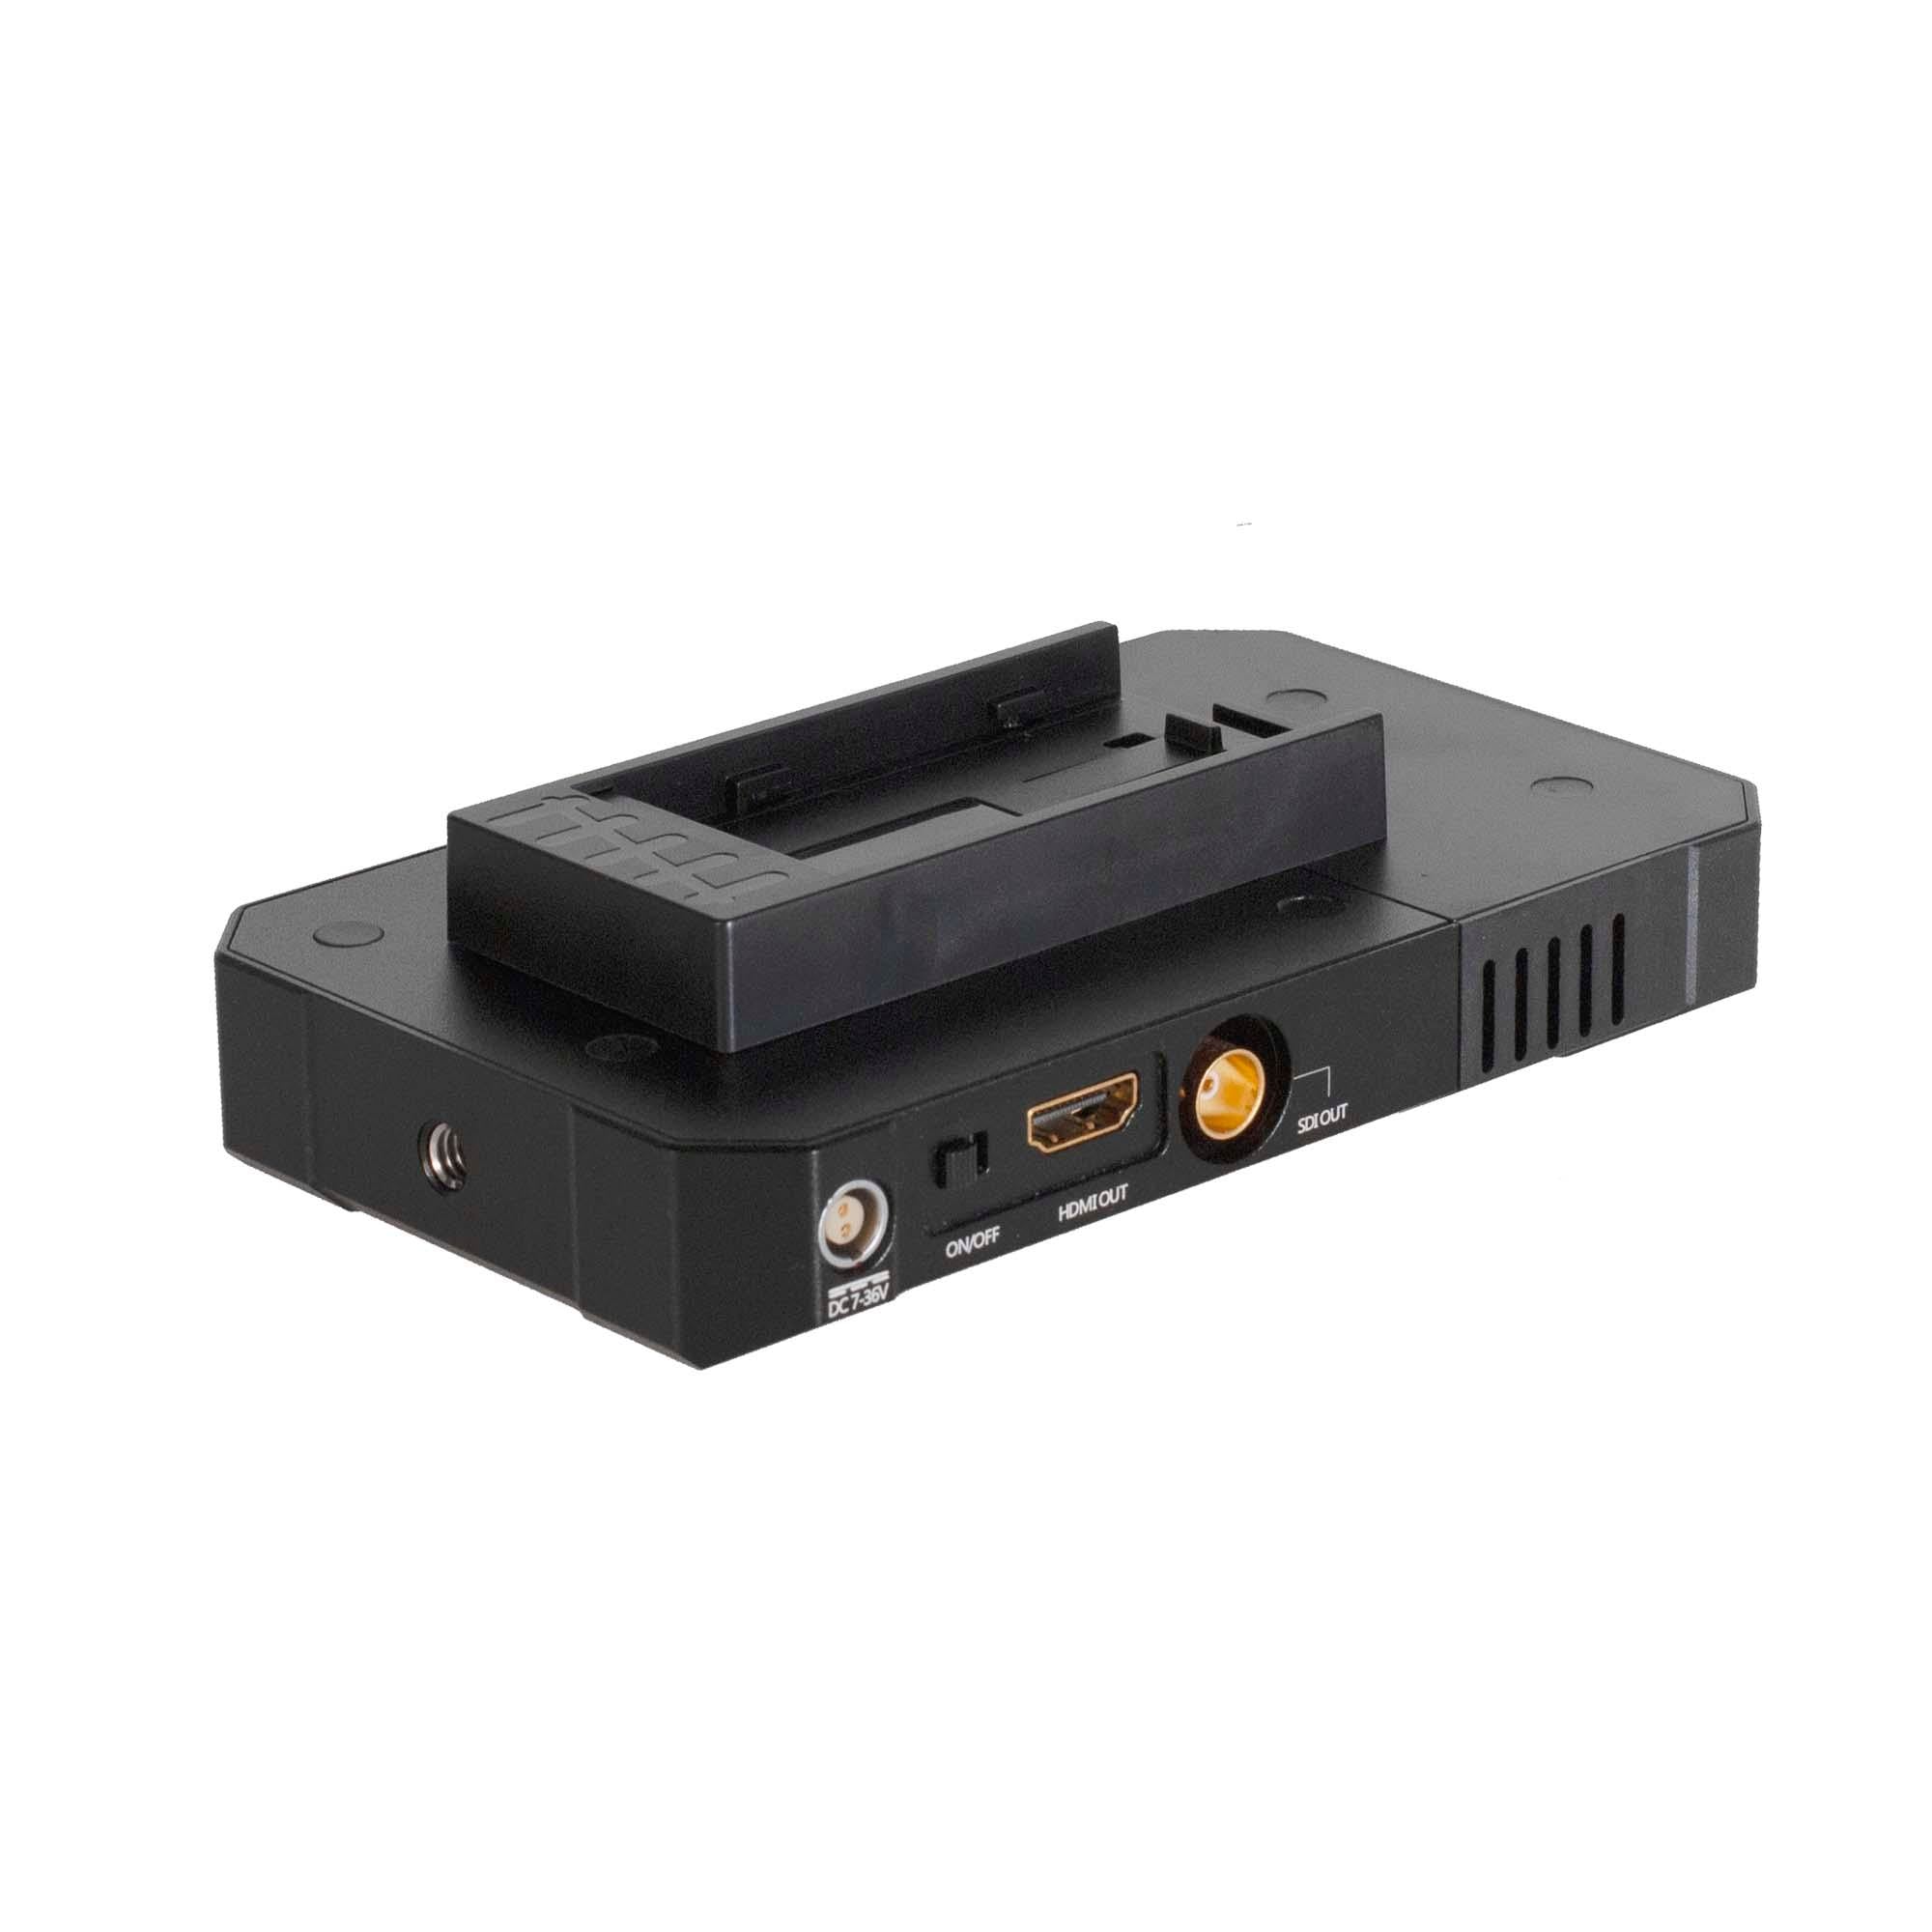 Ghost-Eye 300M Wireless HDMI and SDI Video Transmission Kit